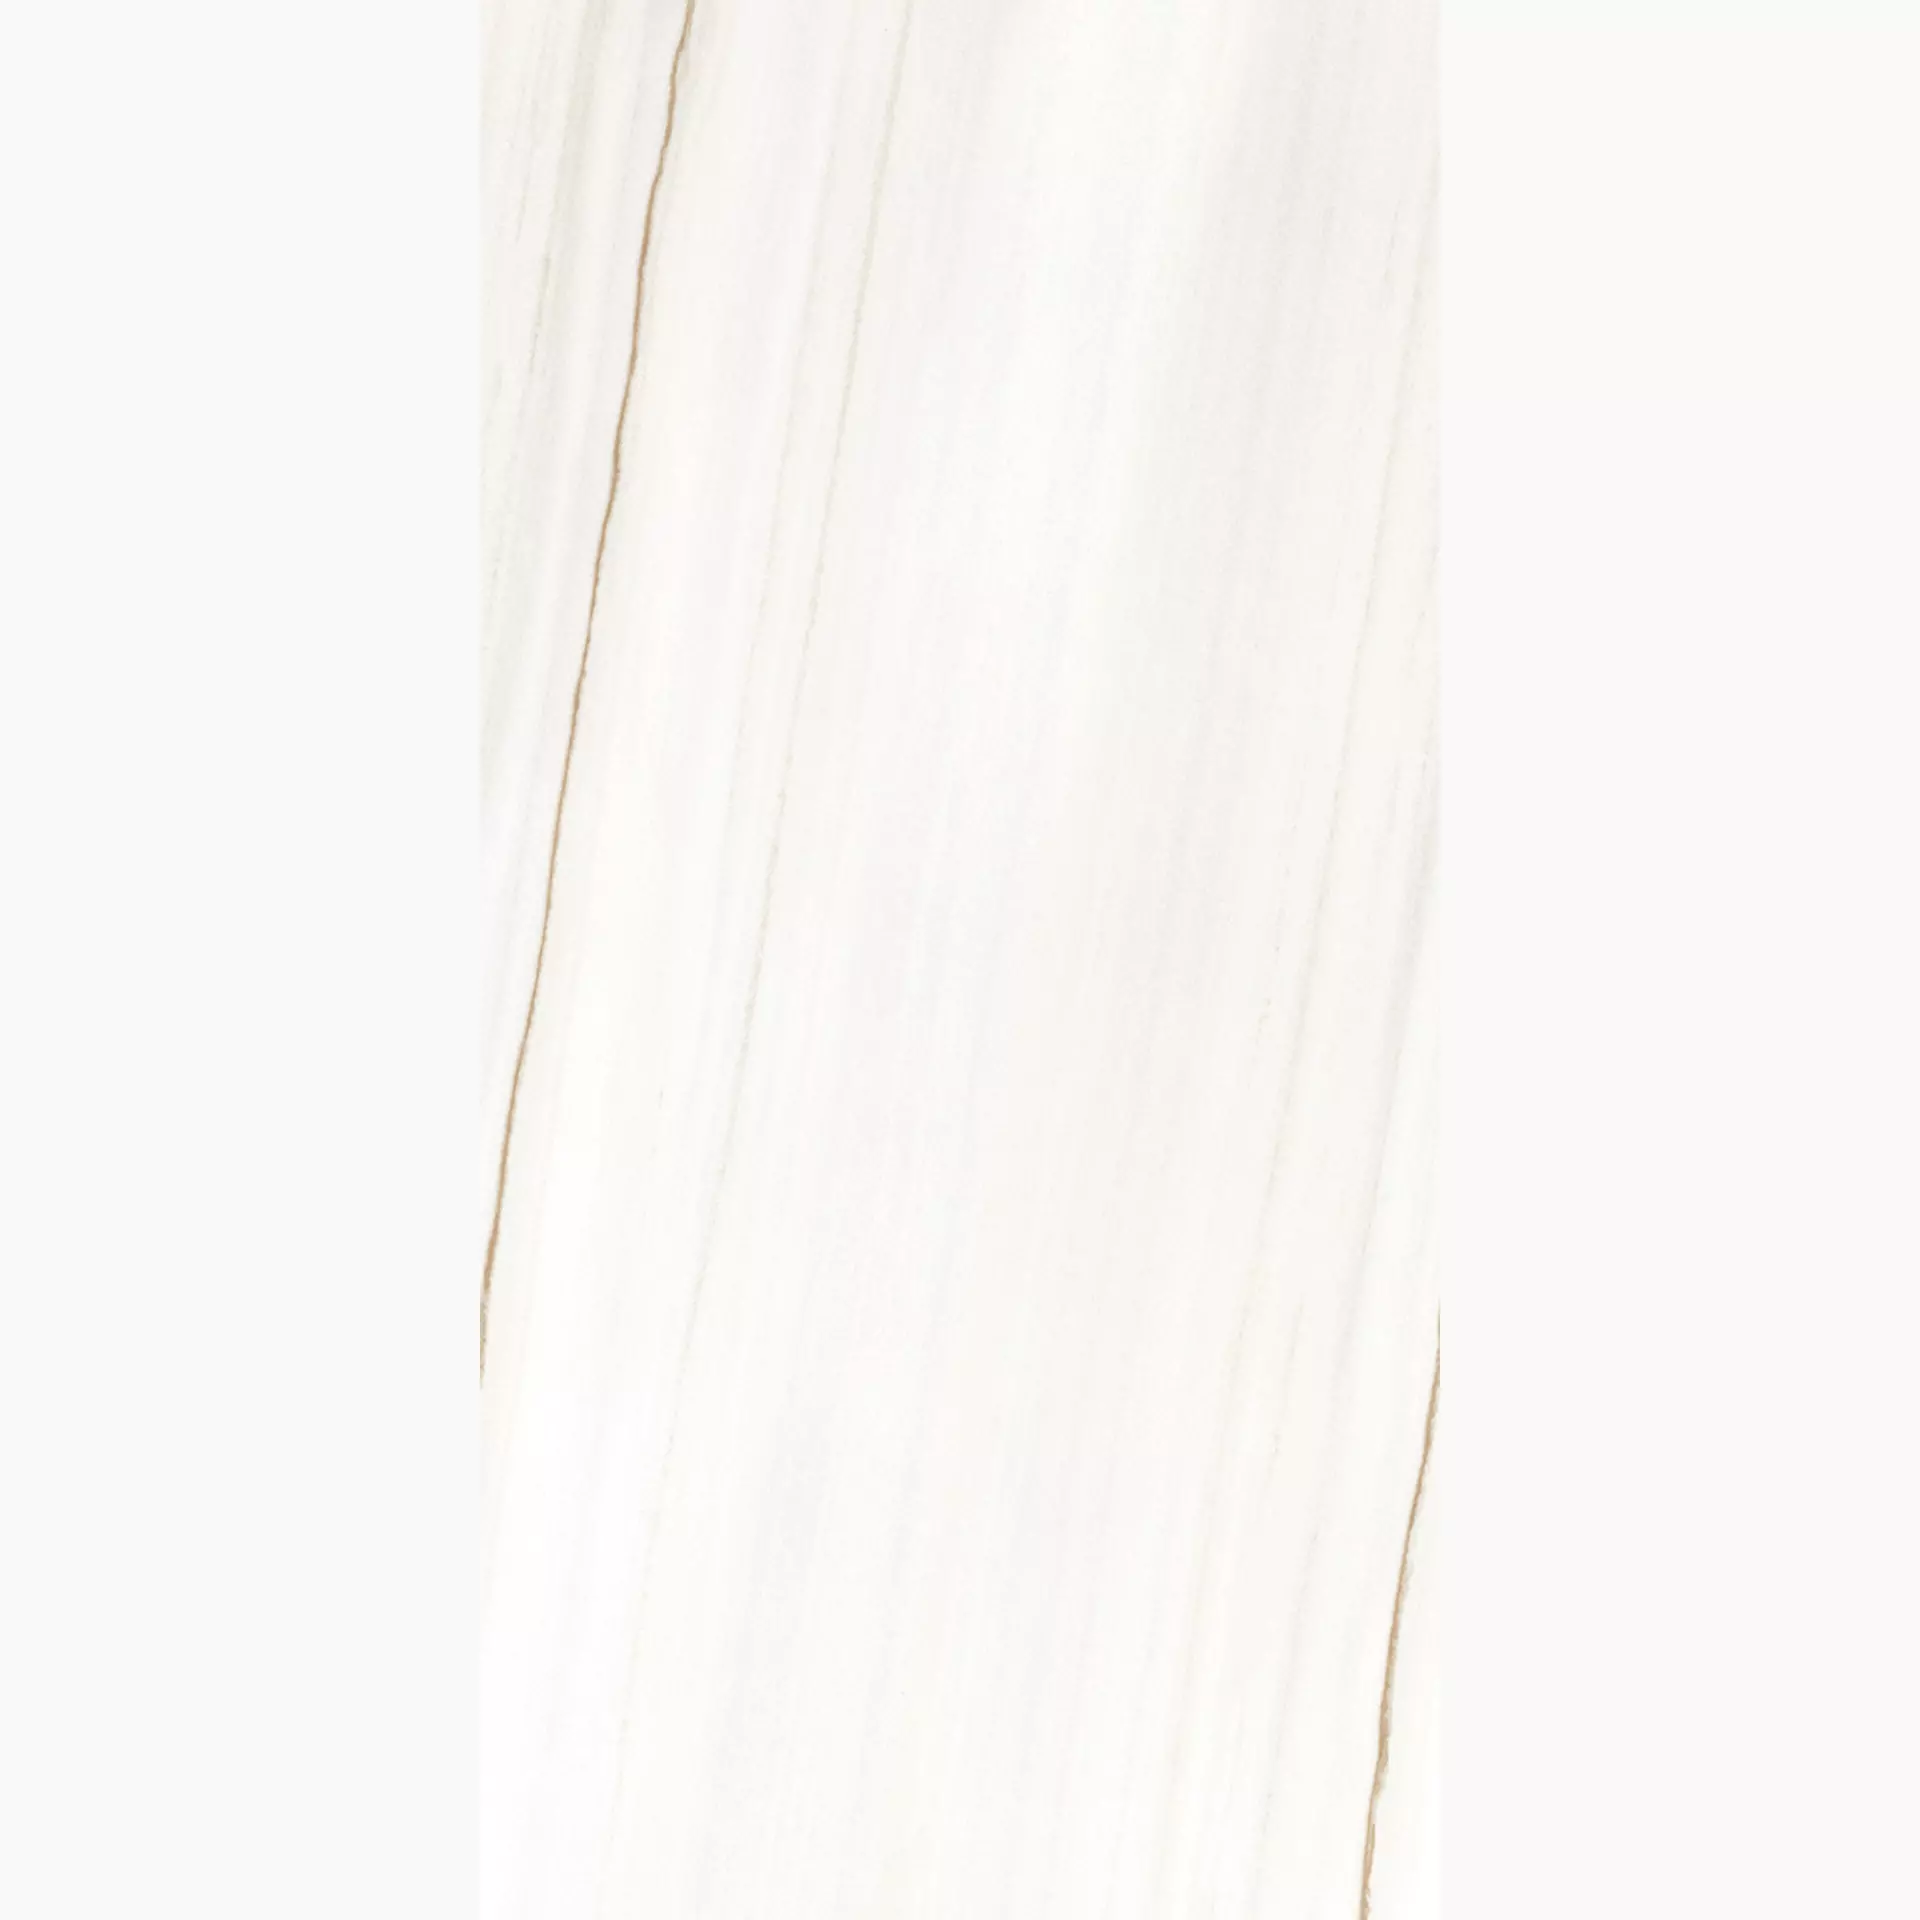 Rondine Canova Lasa White Naturale J88855 60x120cm rectified 8,5mm